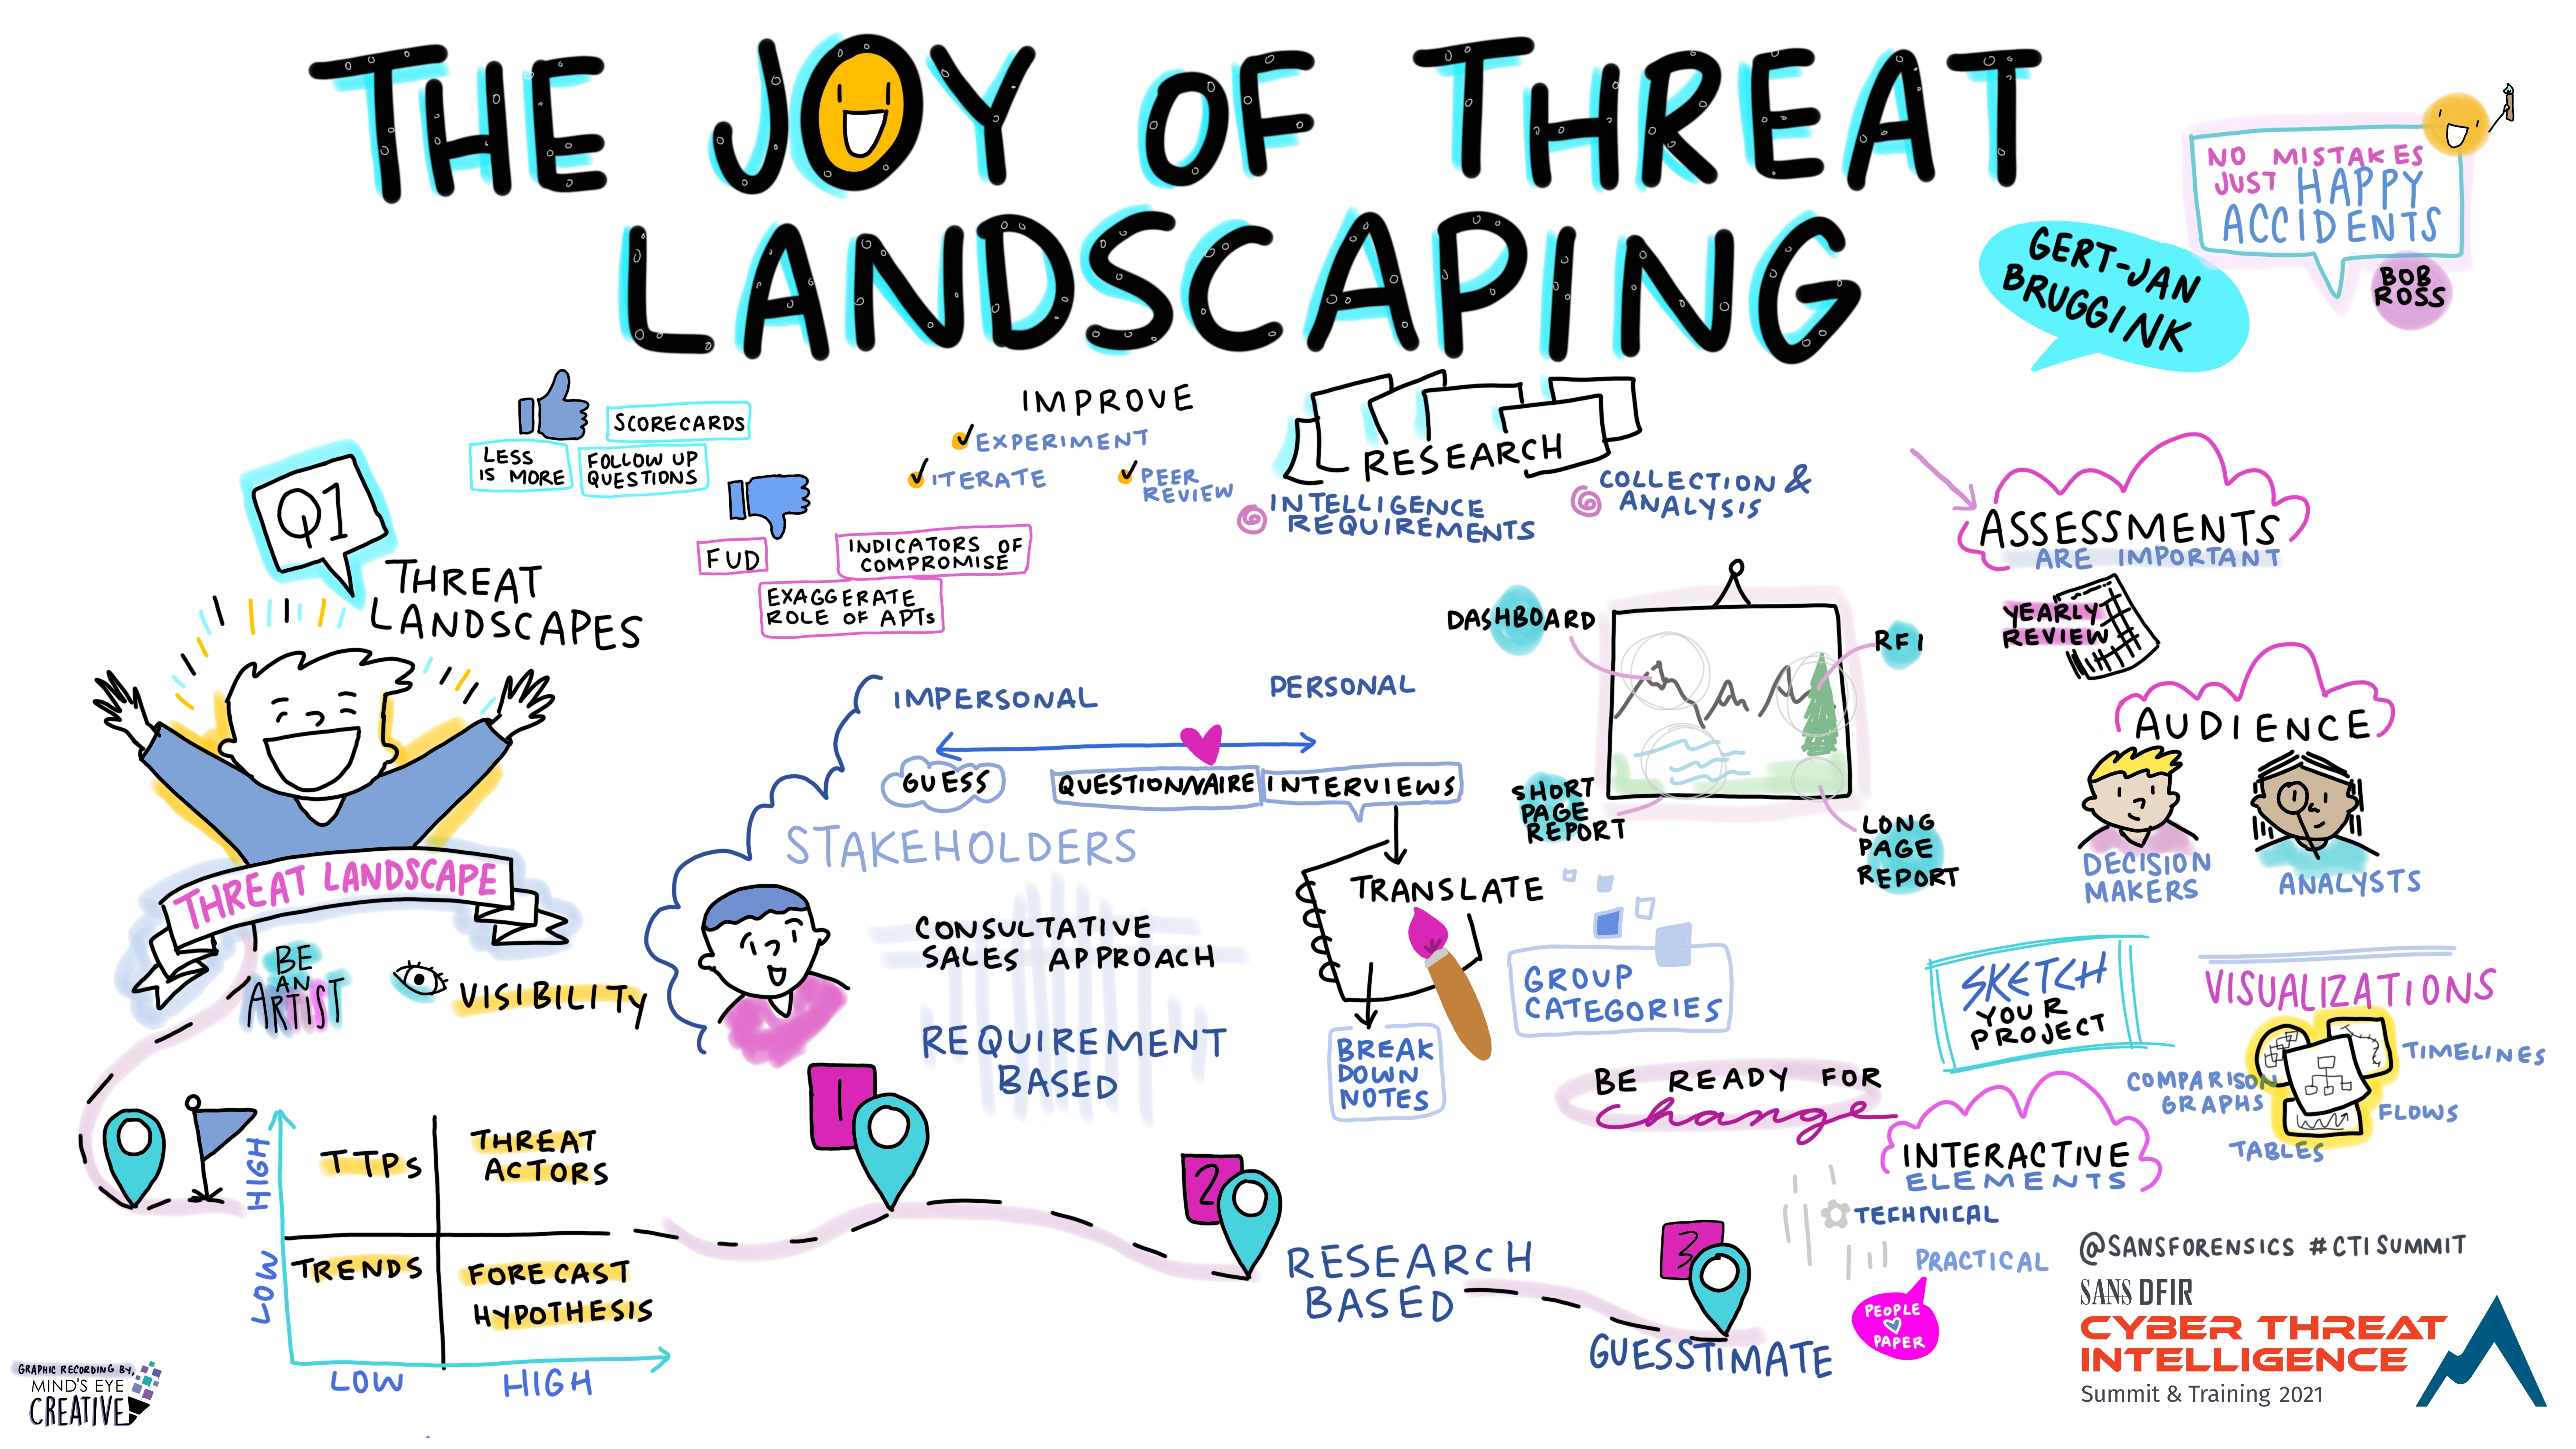 The_Joy_of_Threat_Landscaping_Gert-Jan_Bruggink_-_Graphic_Recording.jpg